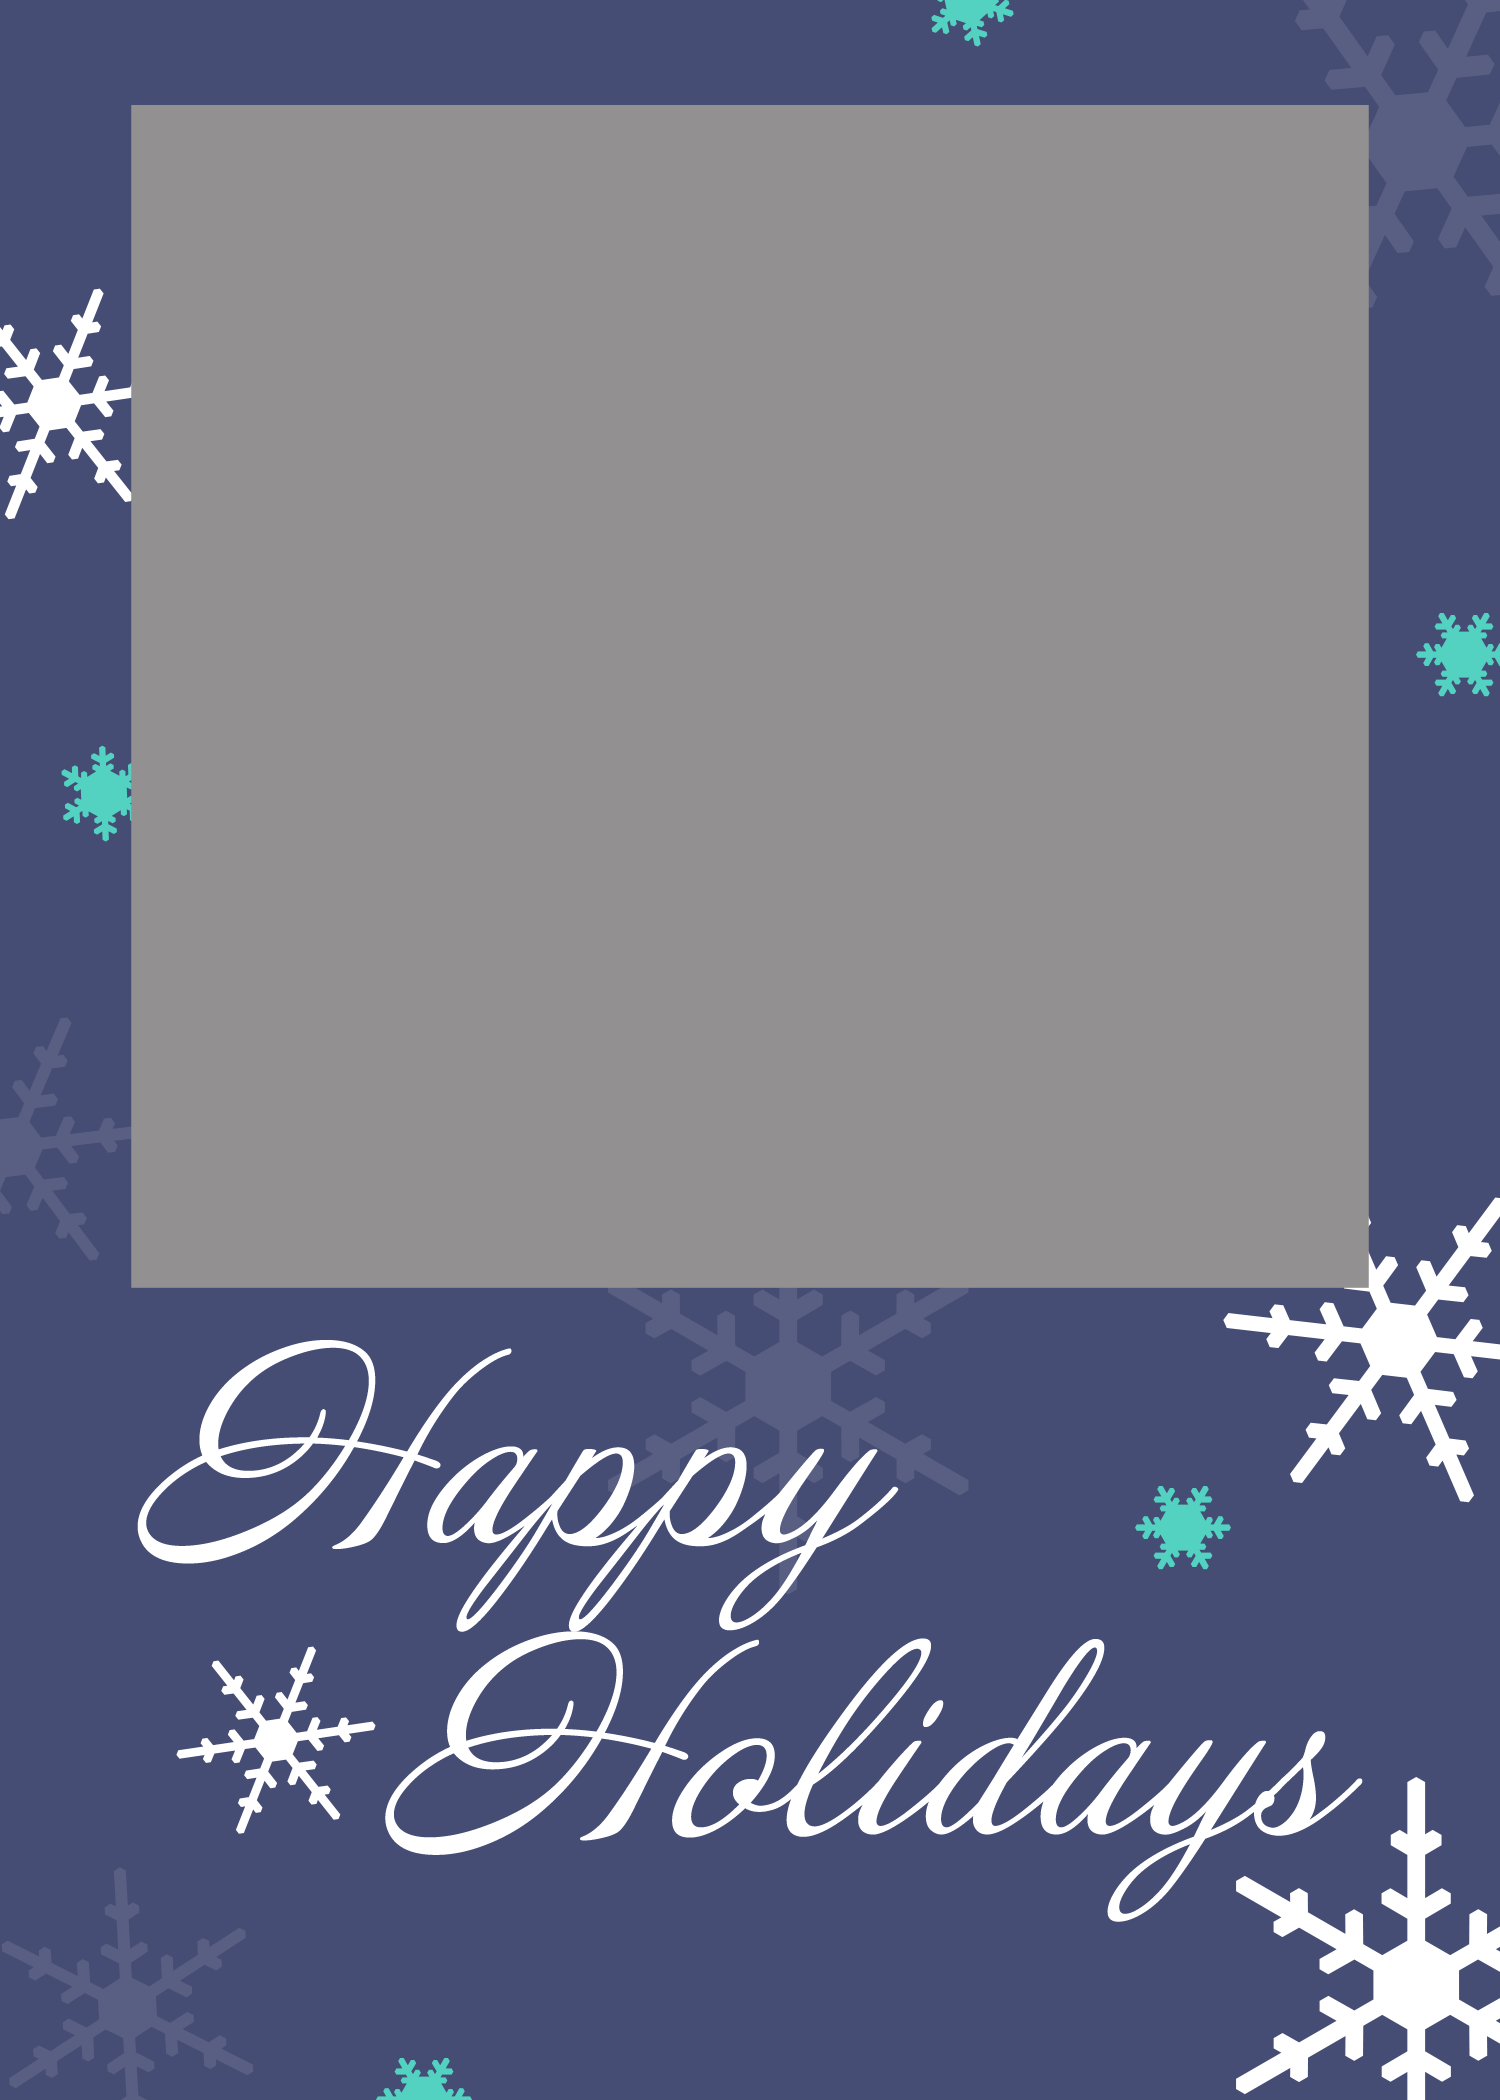 FREE Printable Holiday Photo Card PLUS Pixlr Video Tutorial 